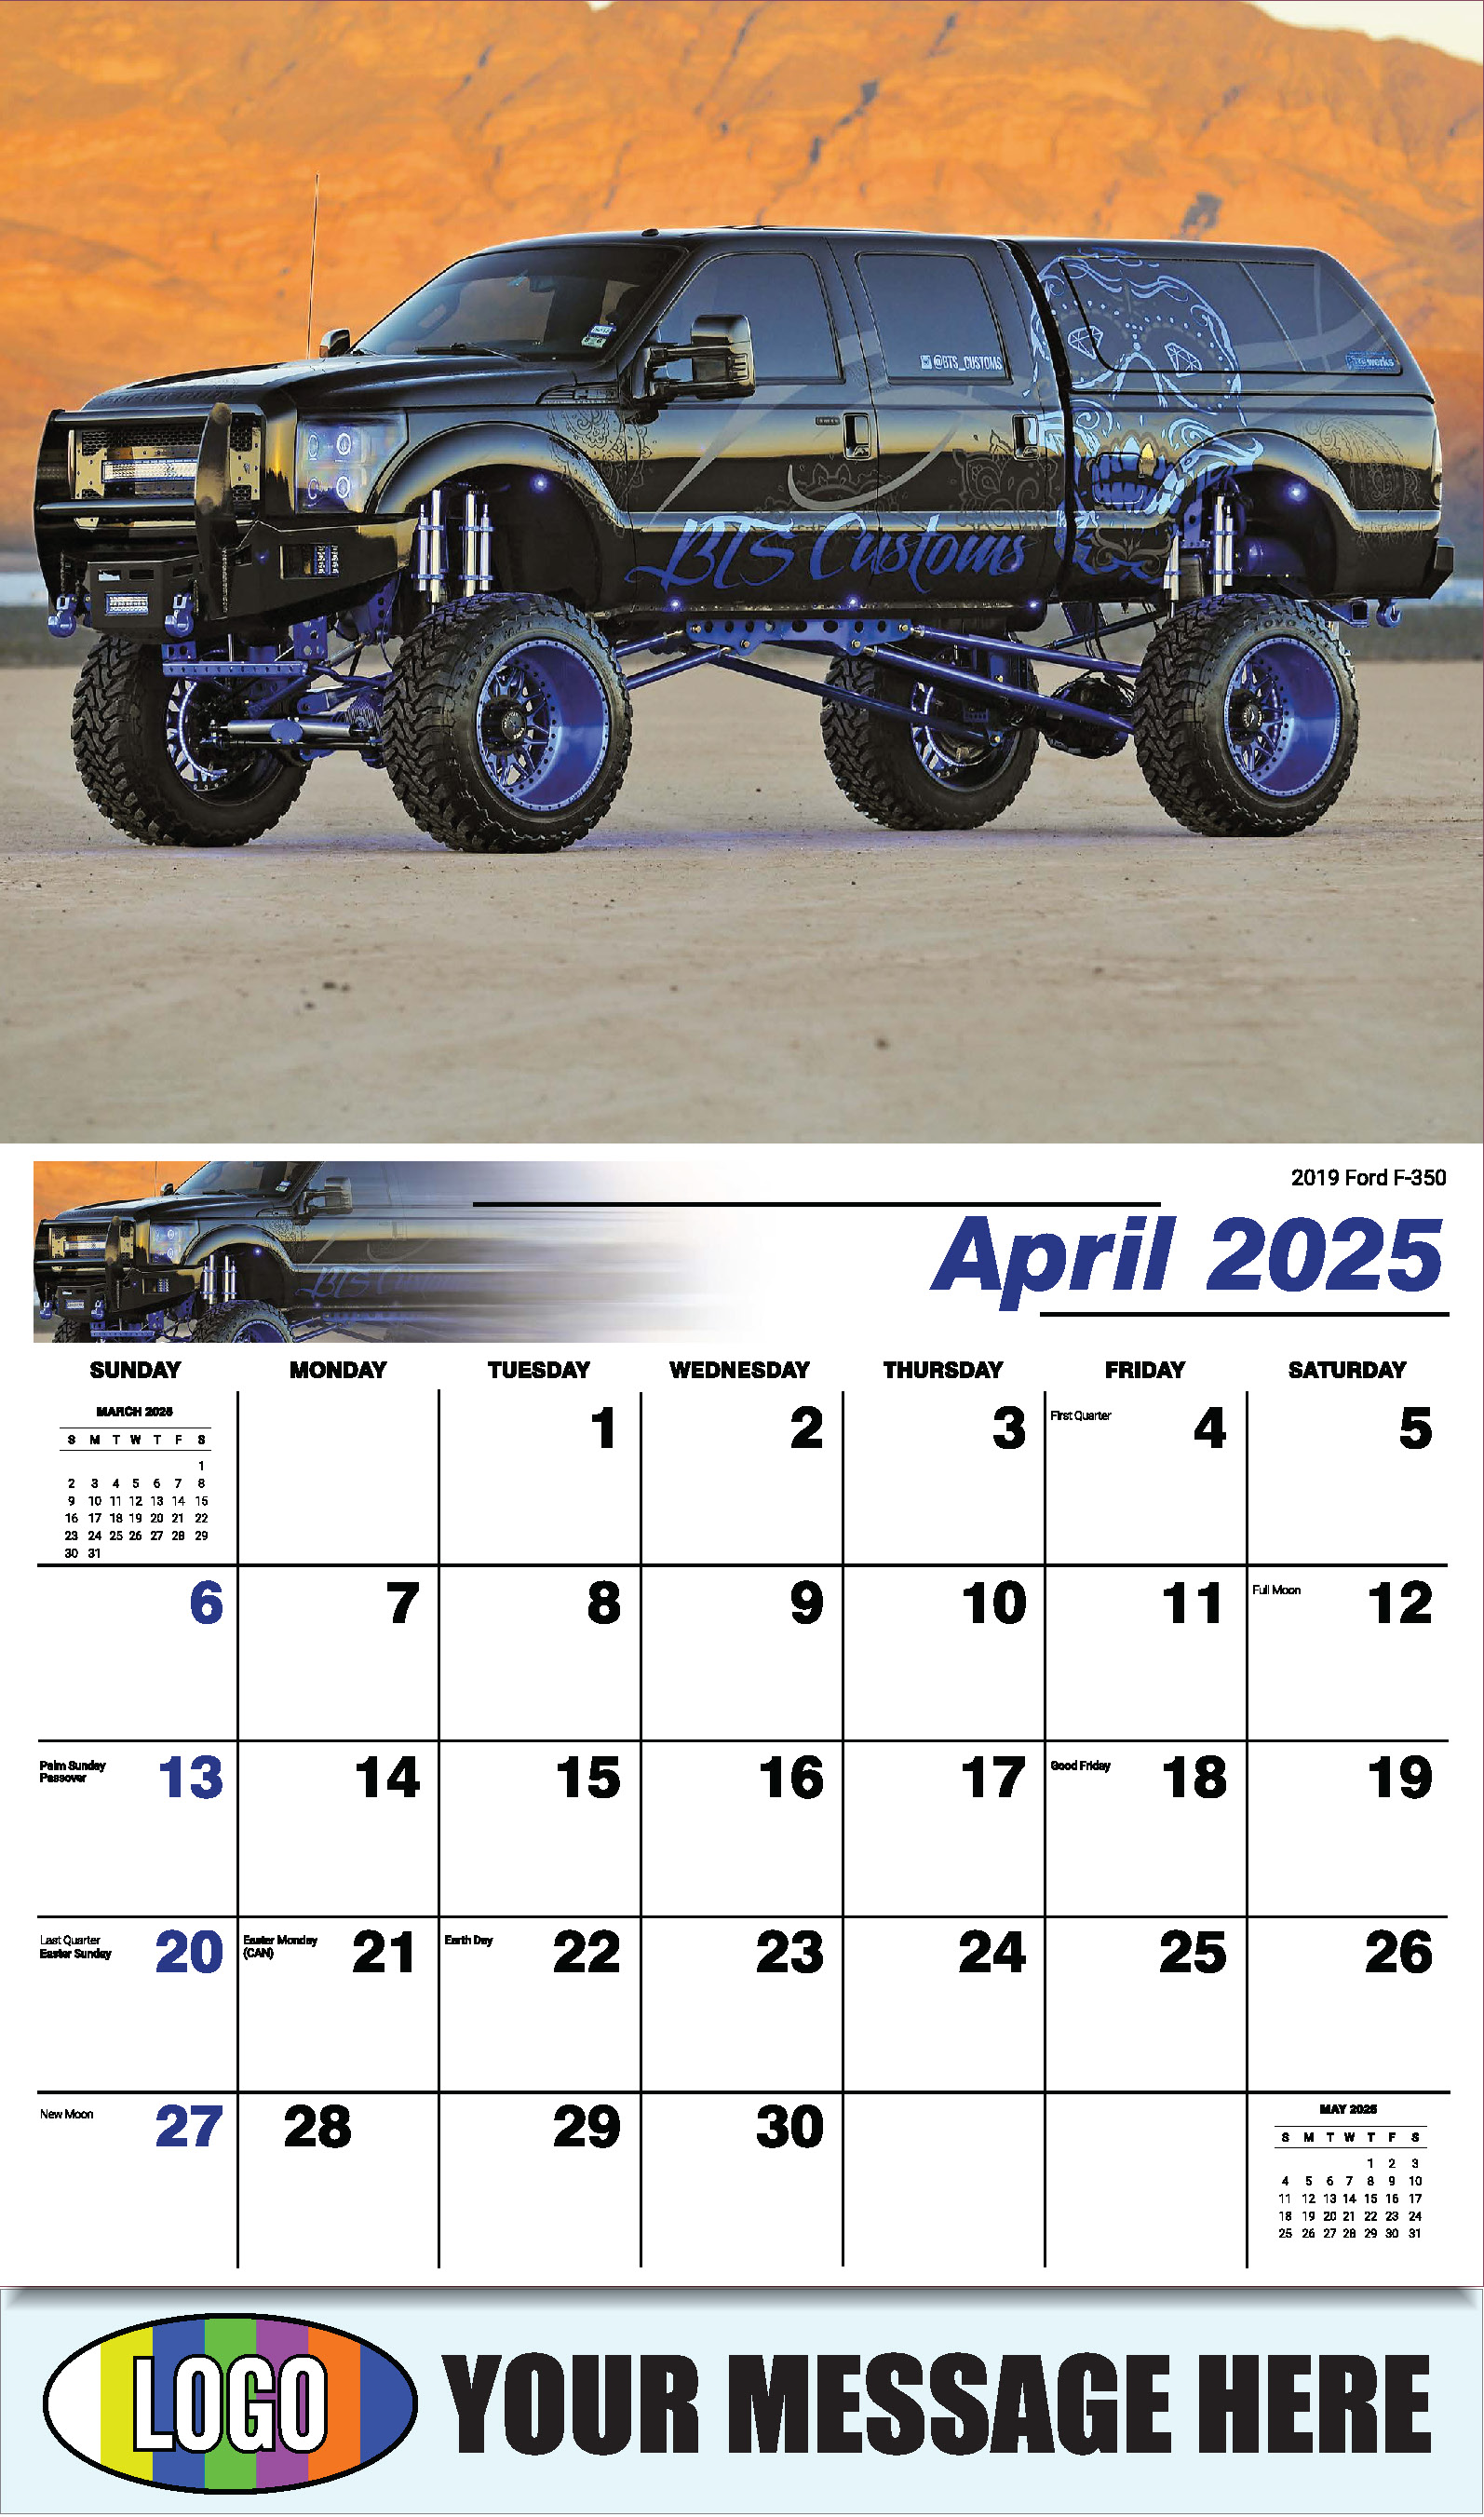 Pumped-Up Pickups 2025 Automotive Business Promo Calendar - April